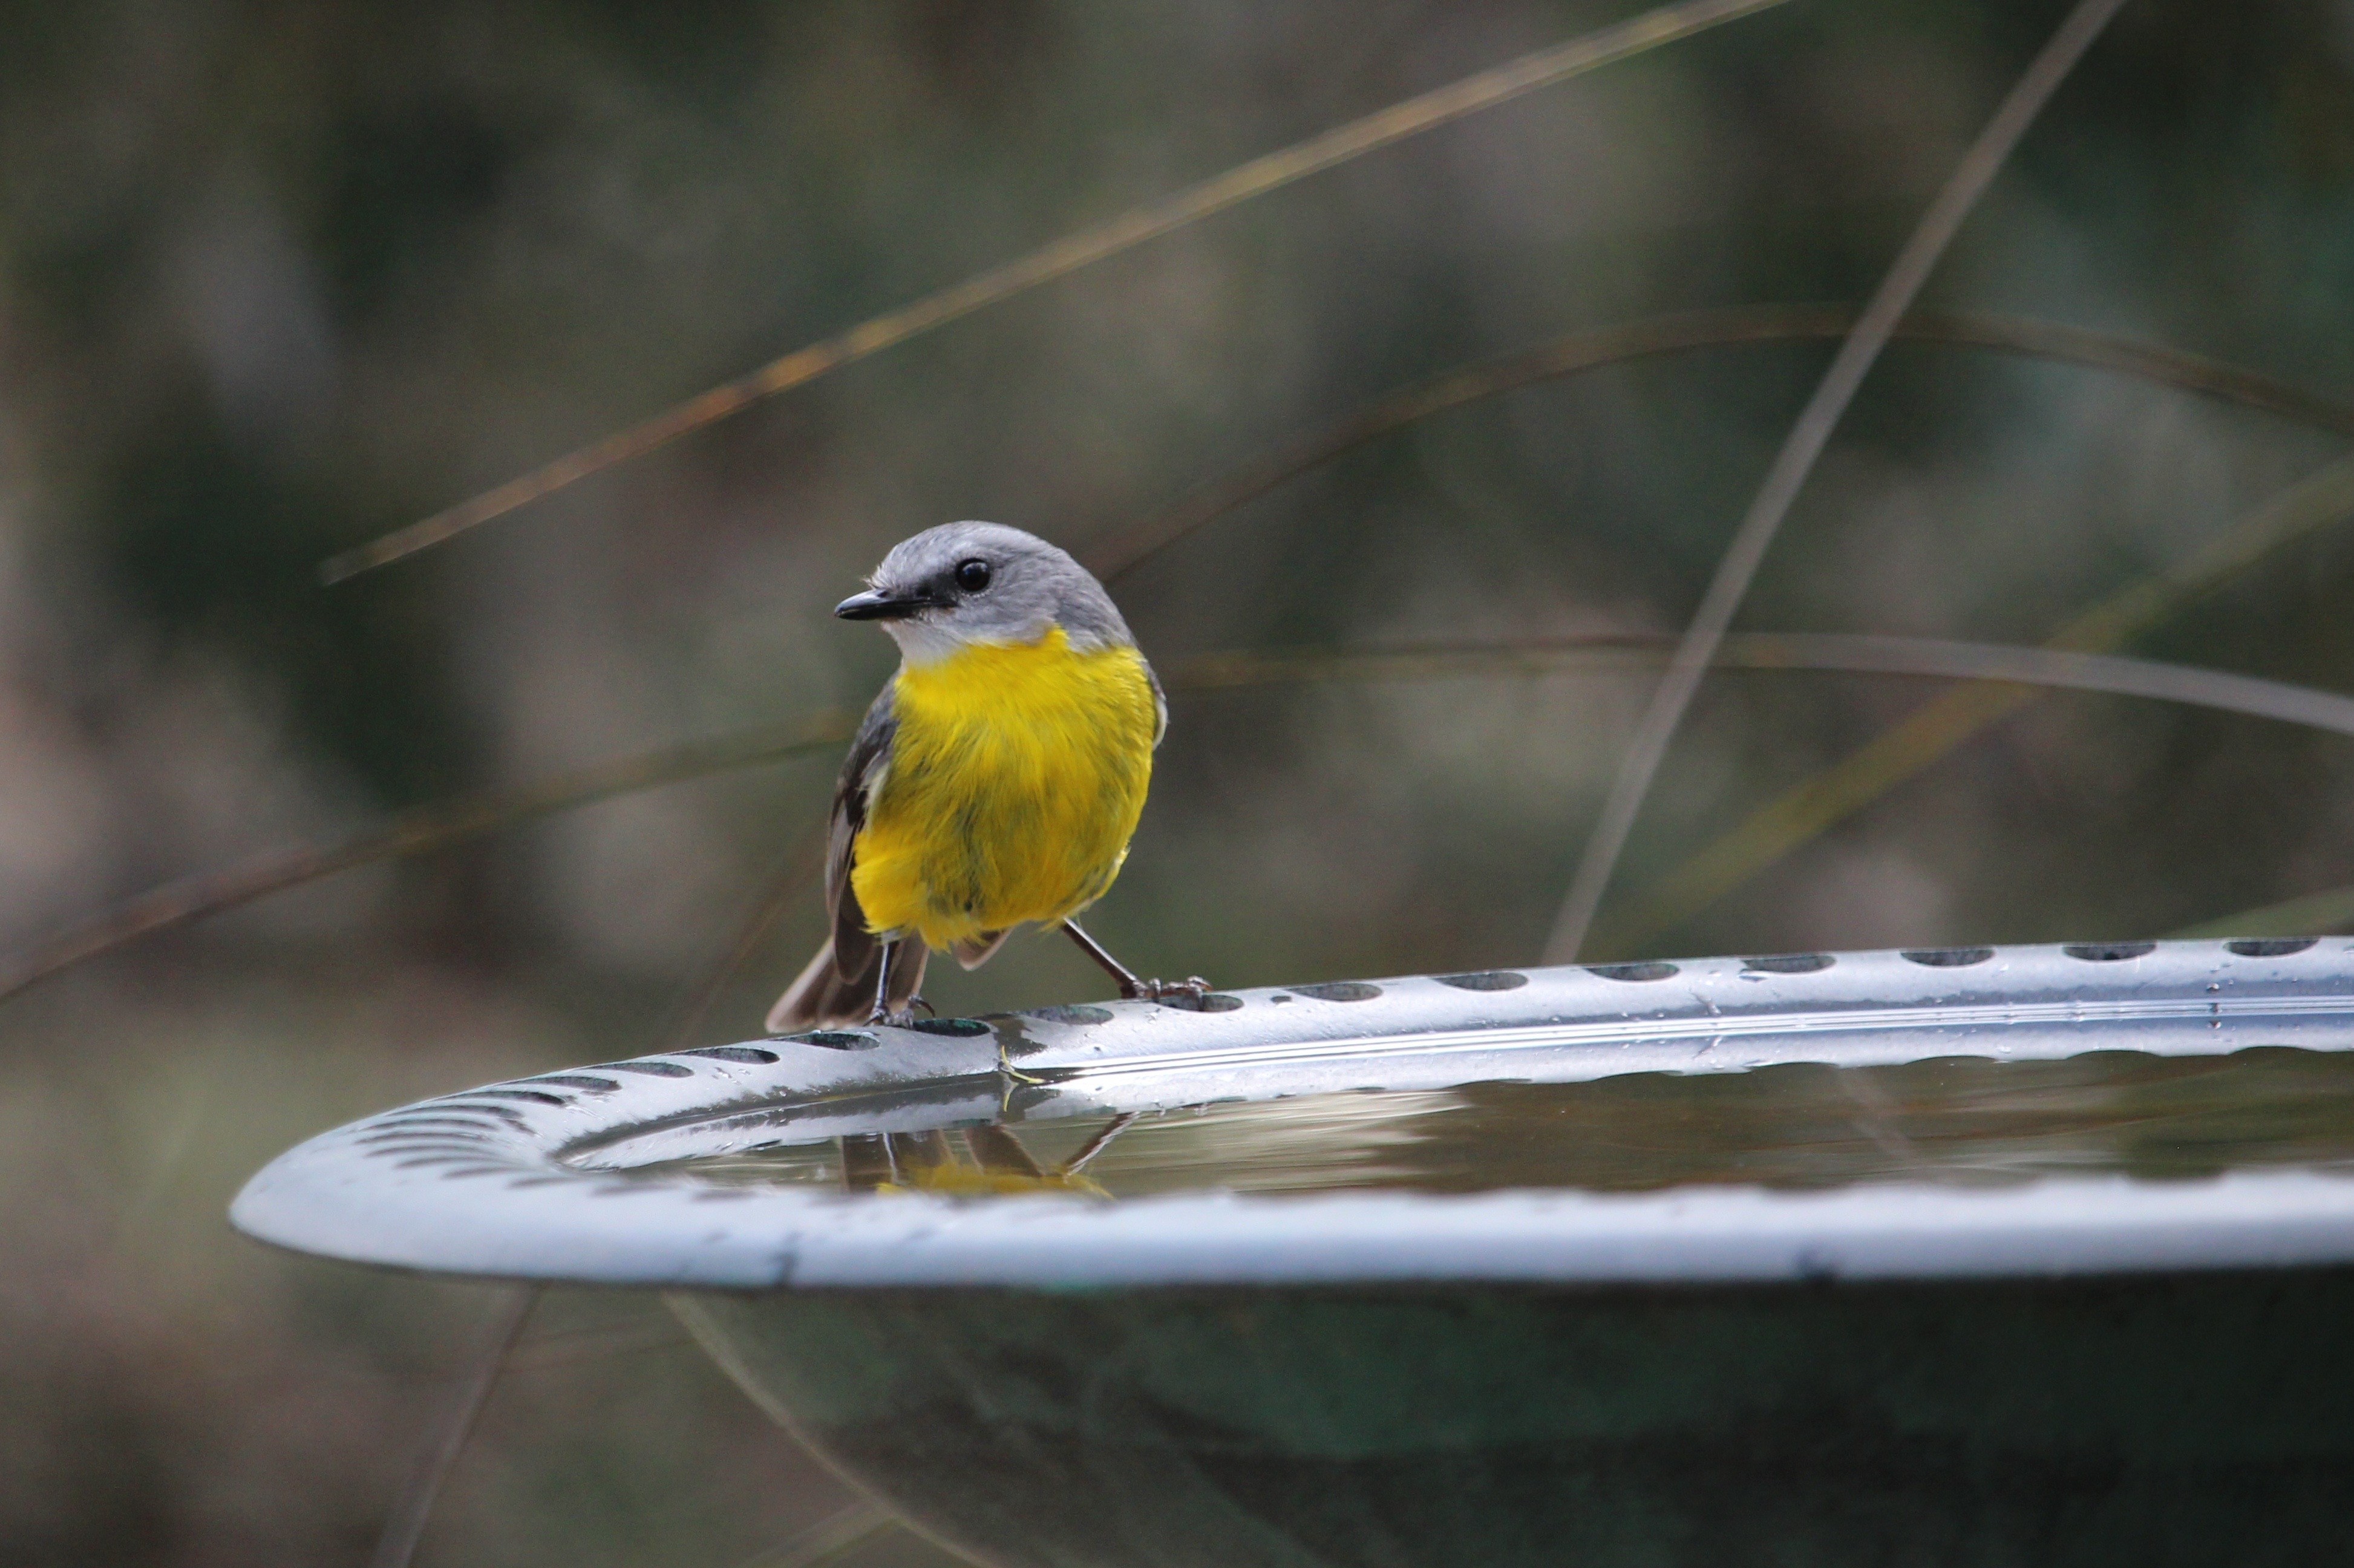 Songbird at bird bath